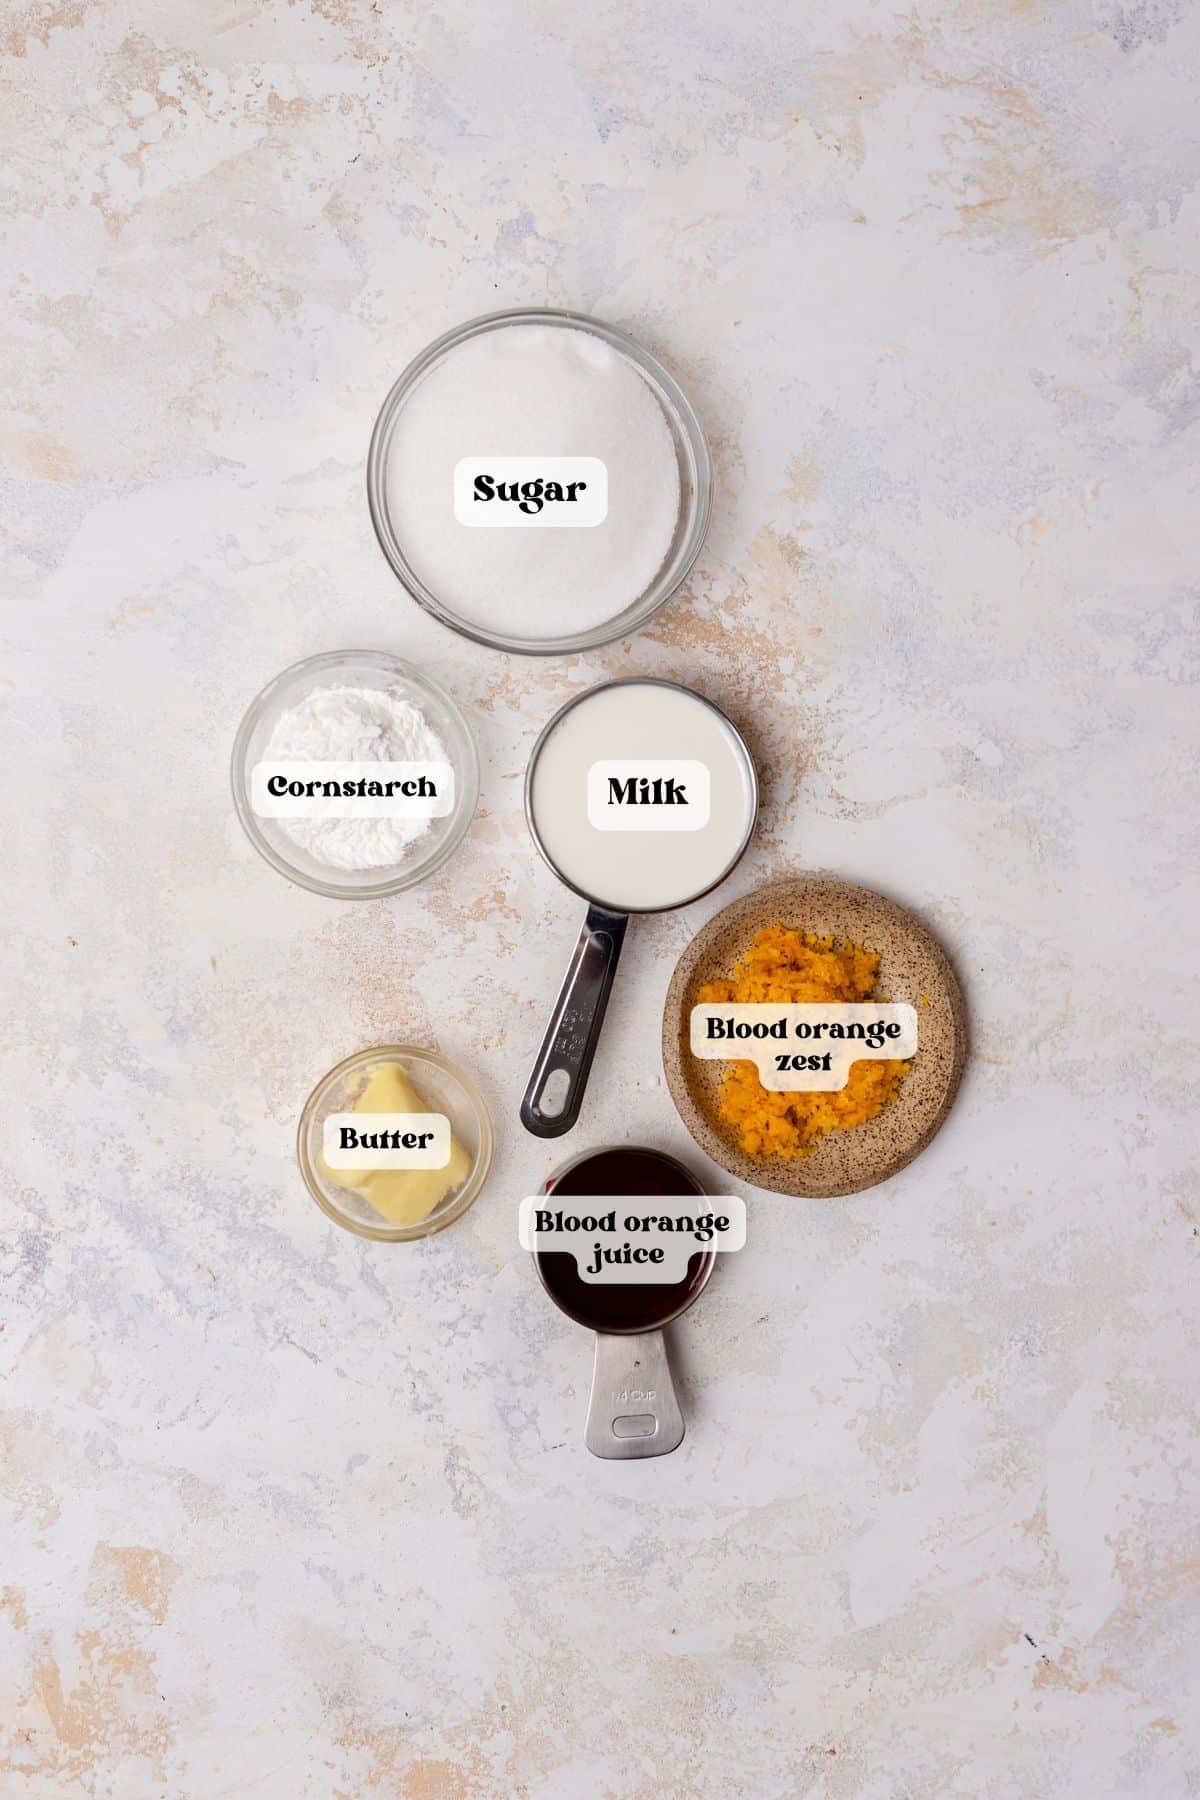 Ingredients to make blood orange curd on a white surface.